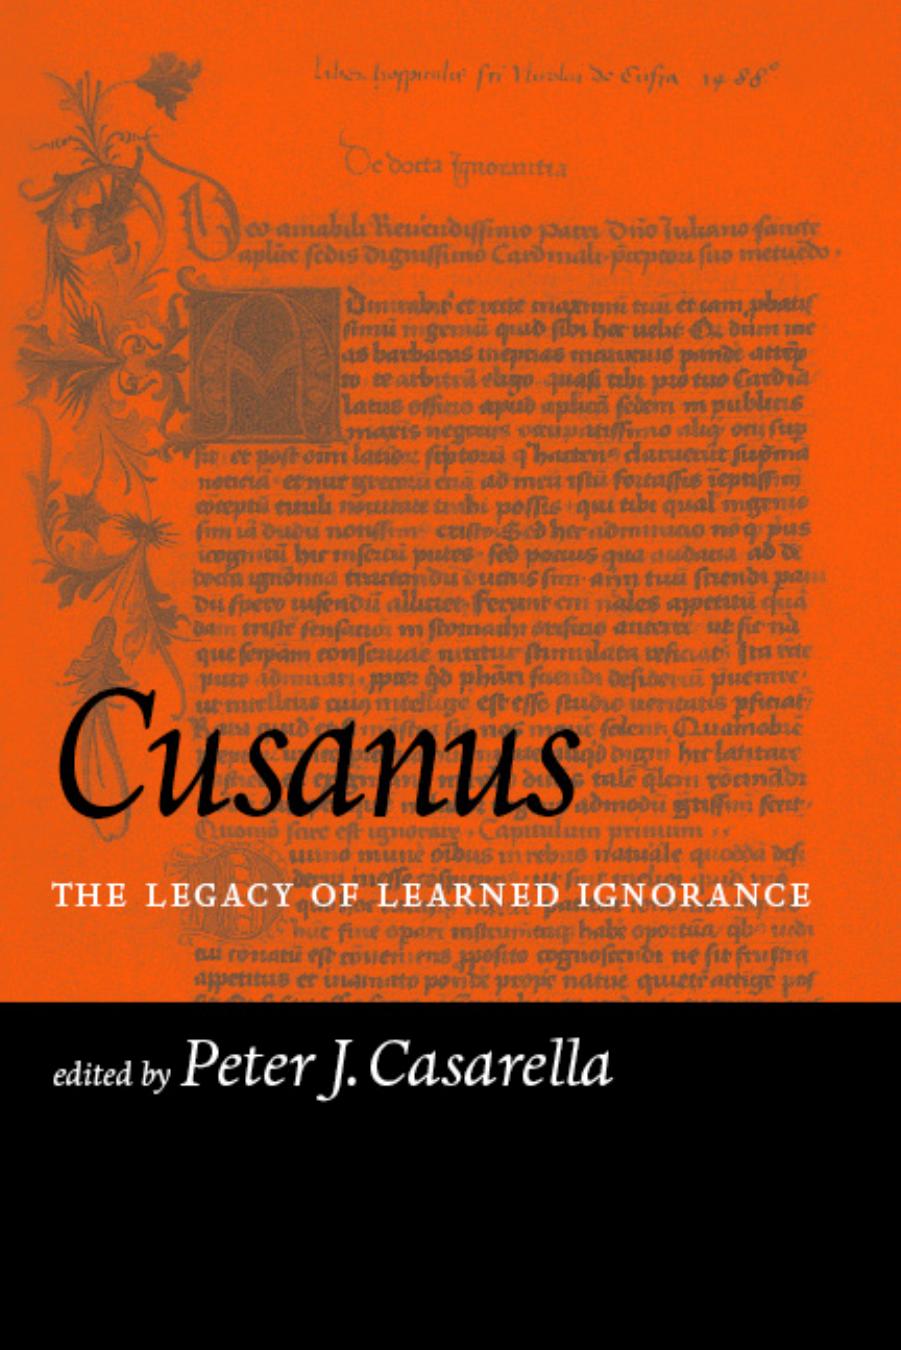 Cusanus: A Legacy of Learned Ignorance